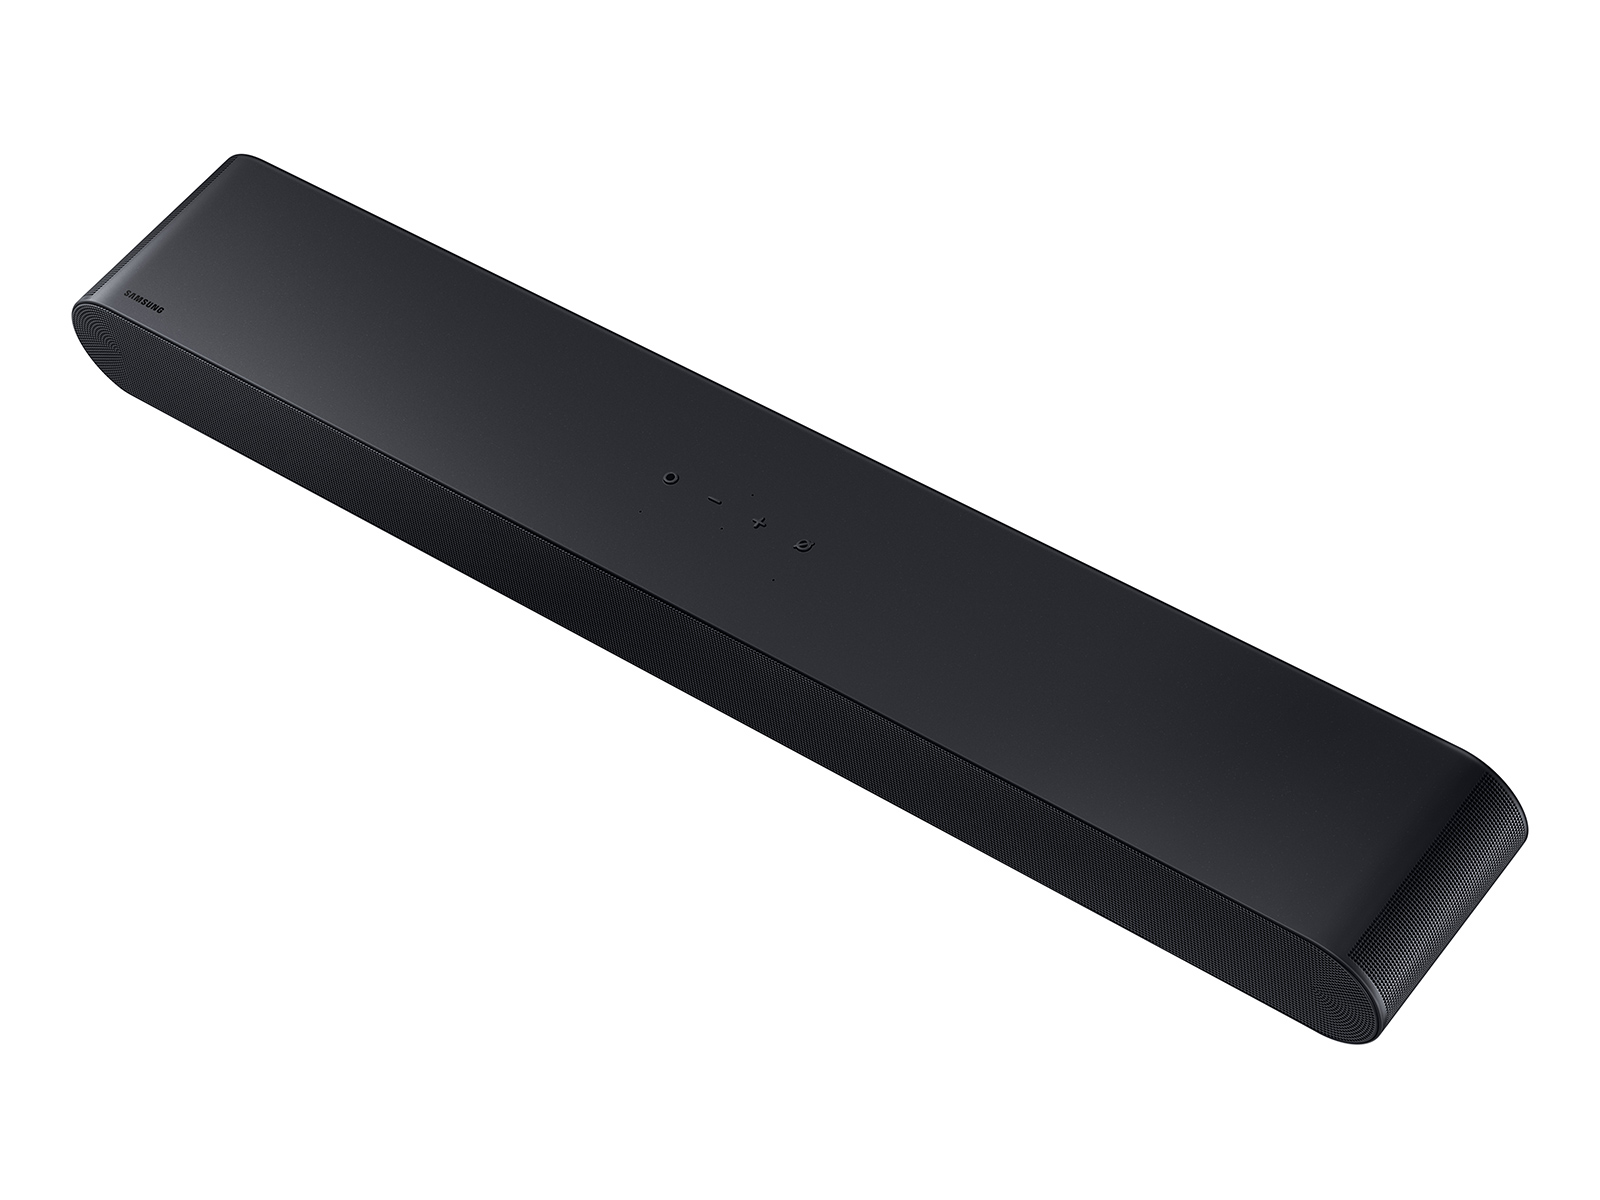 Sonos Arc Sound Bar 5.0Channel Wireless Ethernet, Fast Ethernet